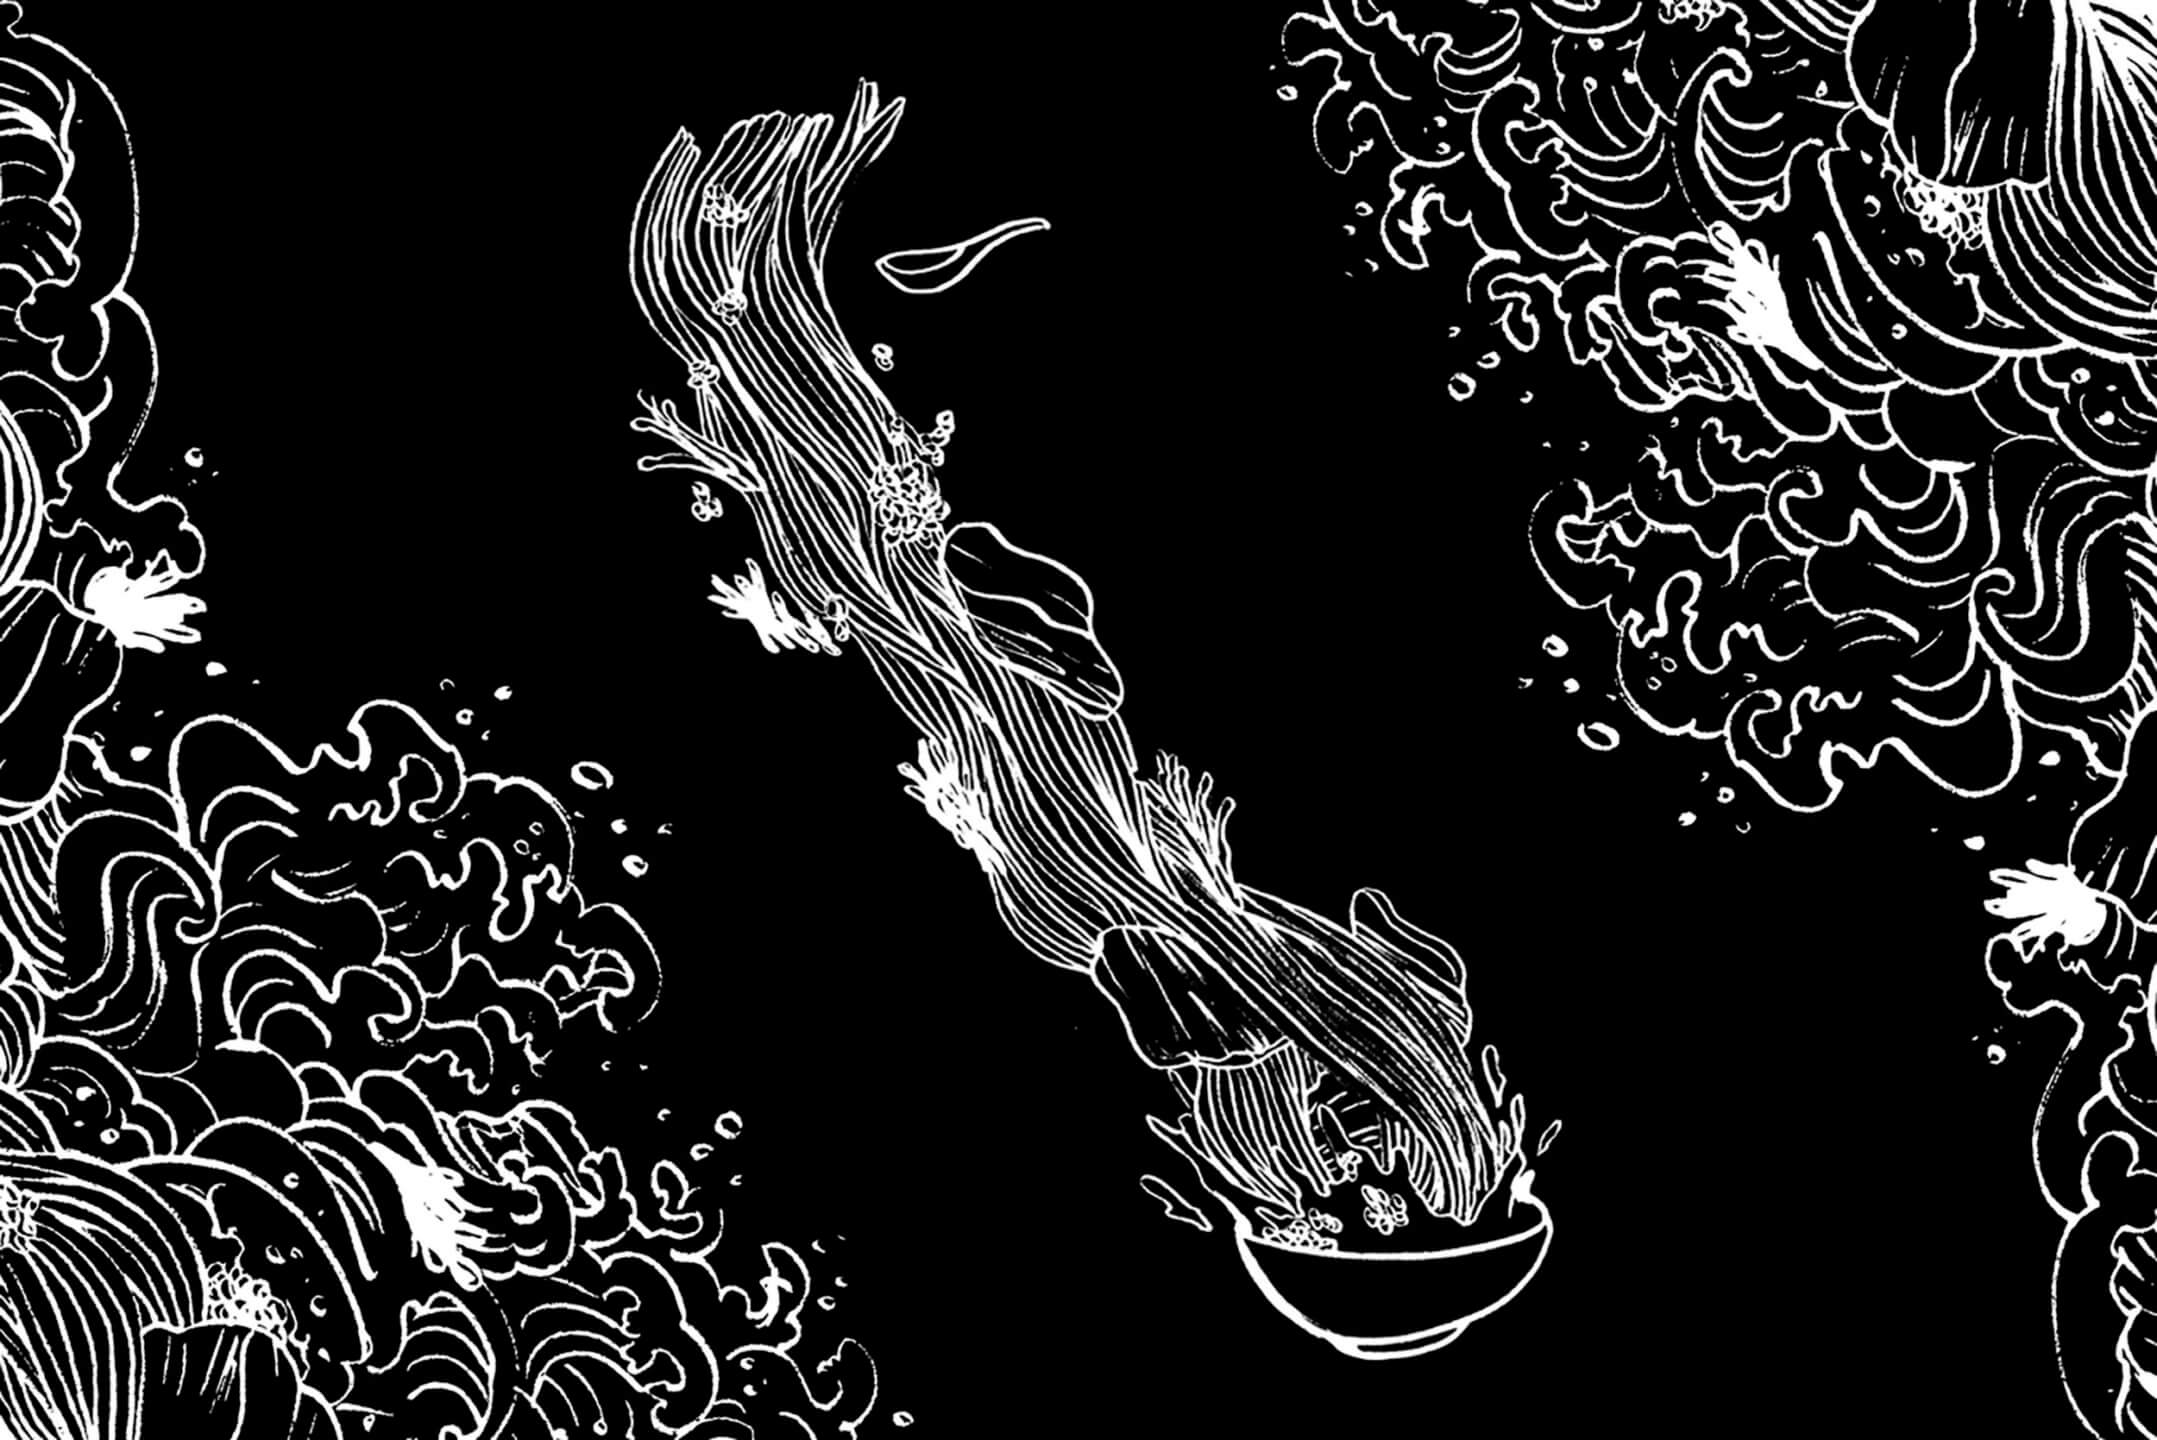 Illustrations of ramen and Japanese waves for ramen restaurant Ippudo